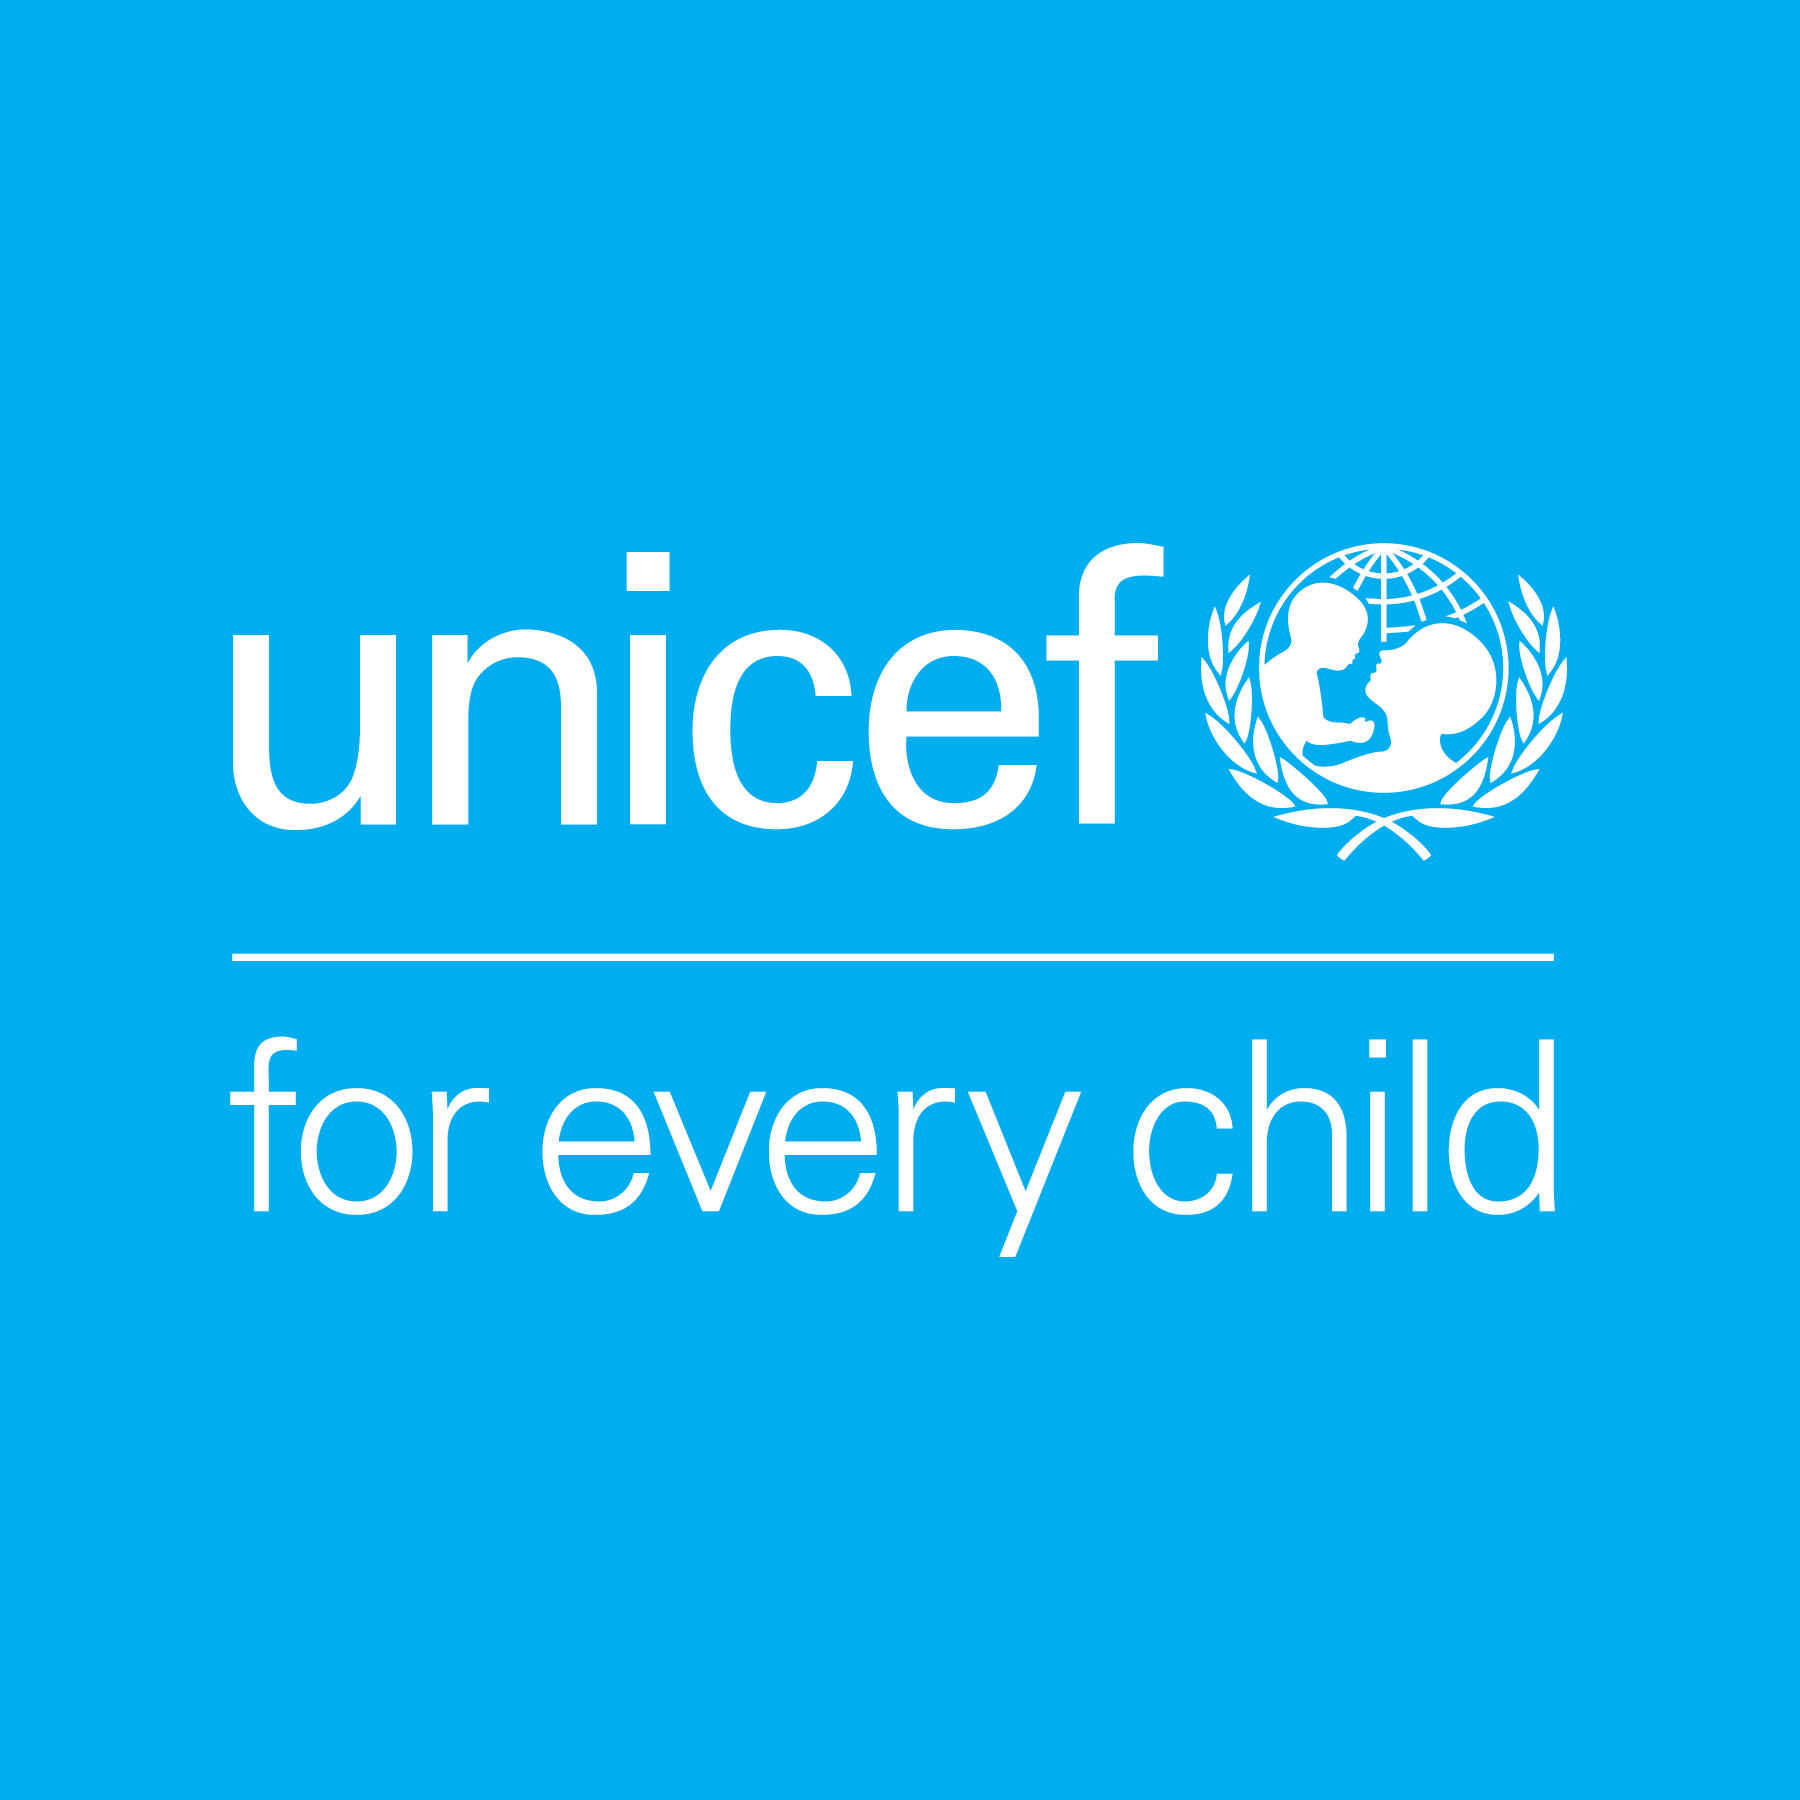 www.unicef.org.uk